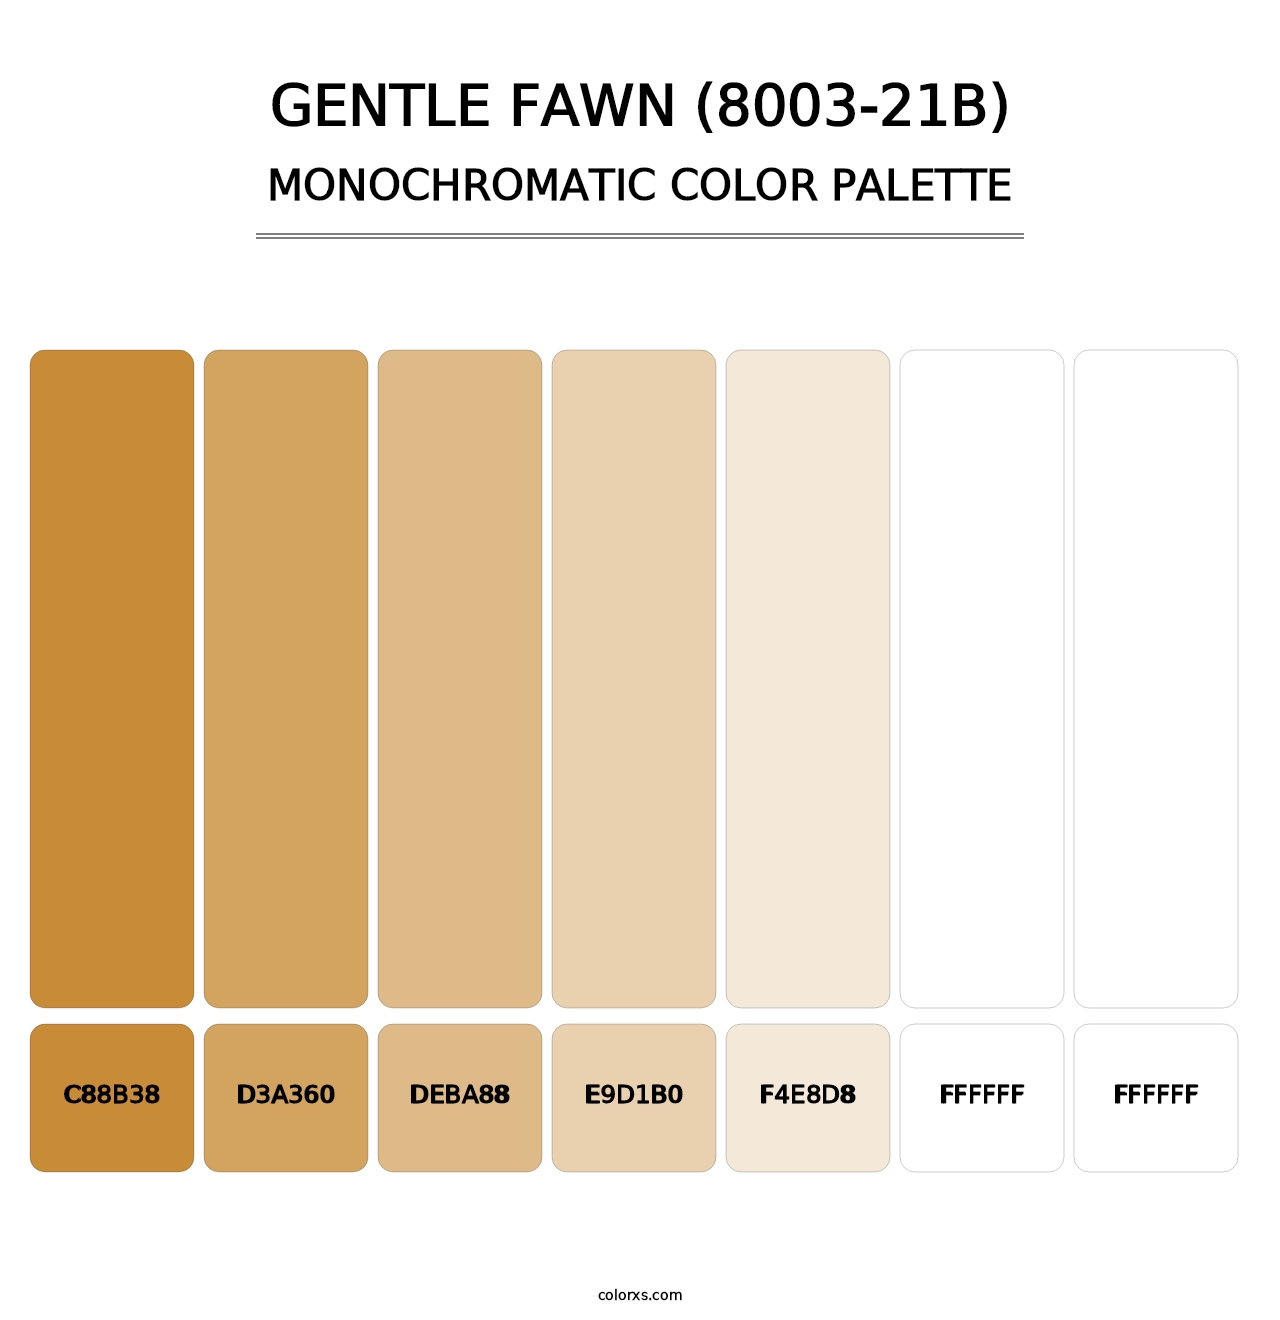 Gentle Fawn (8003-21B) - Monochromatic Color Palette